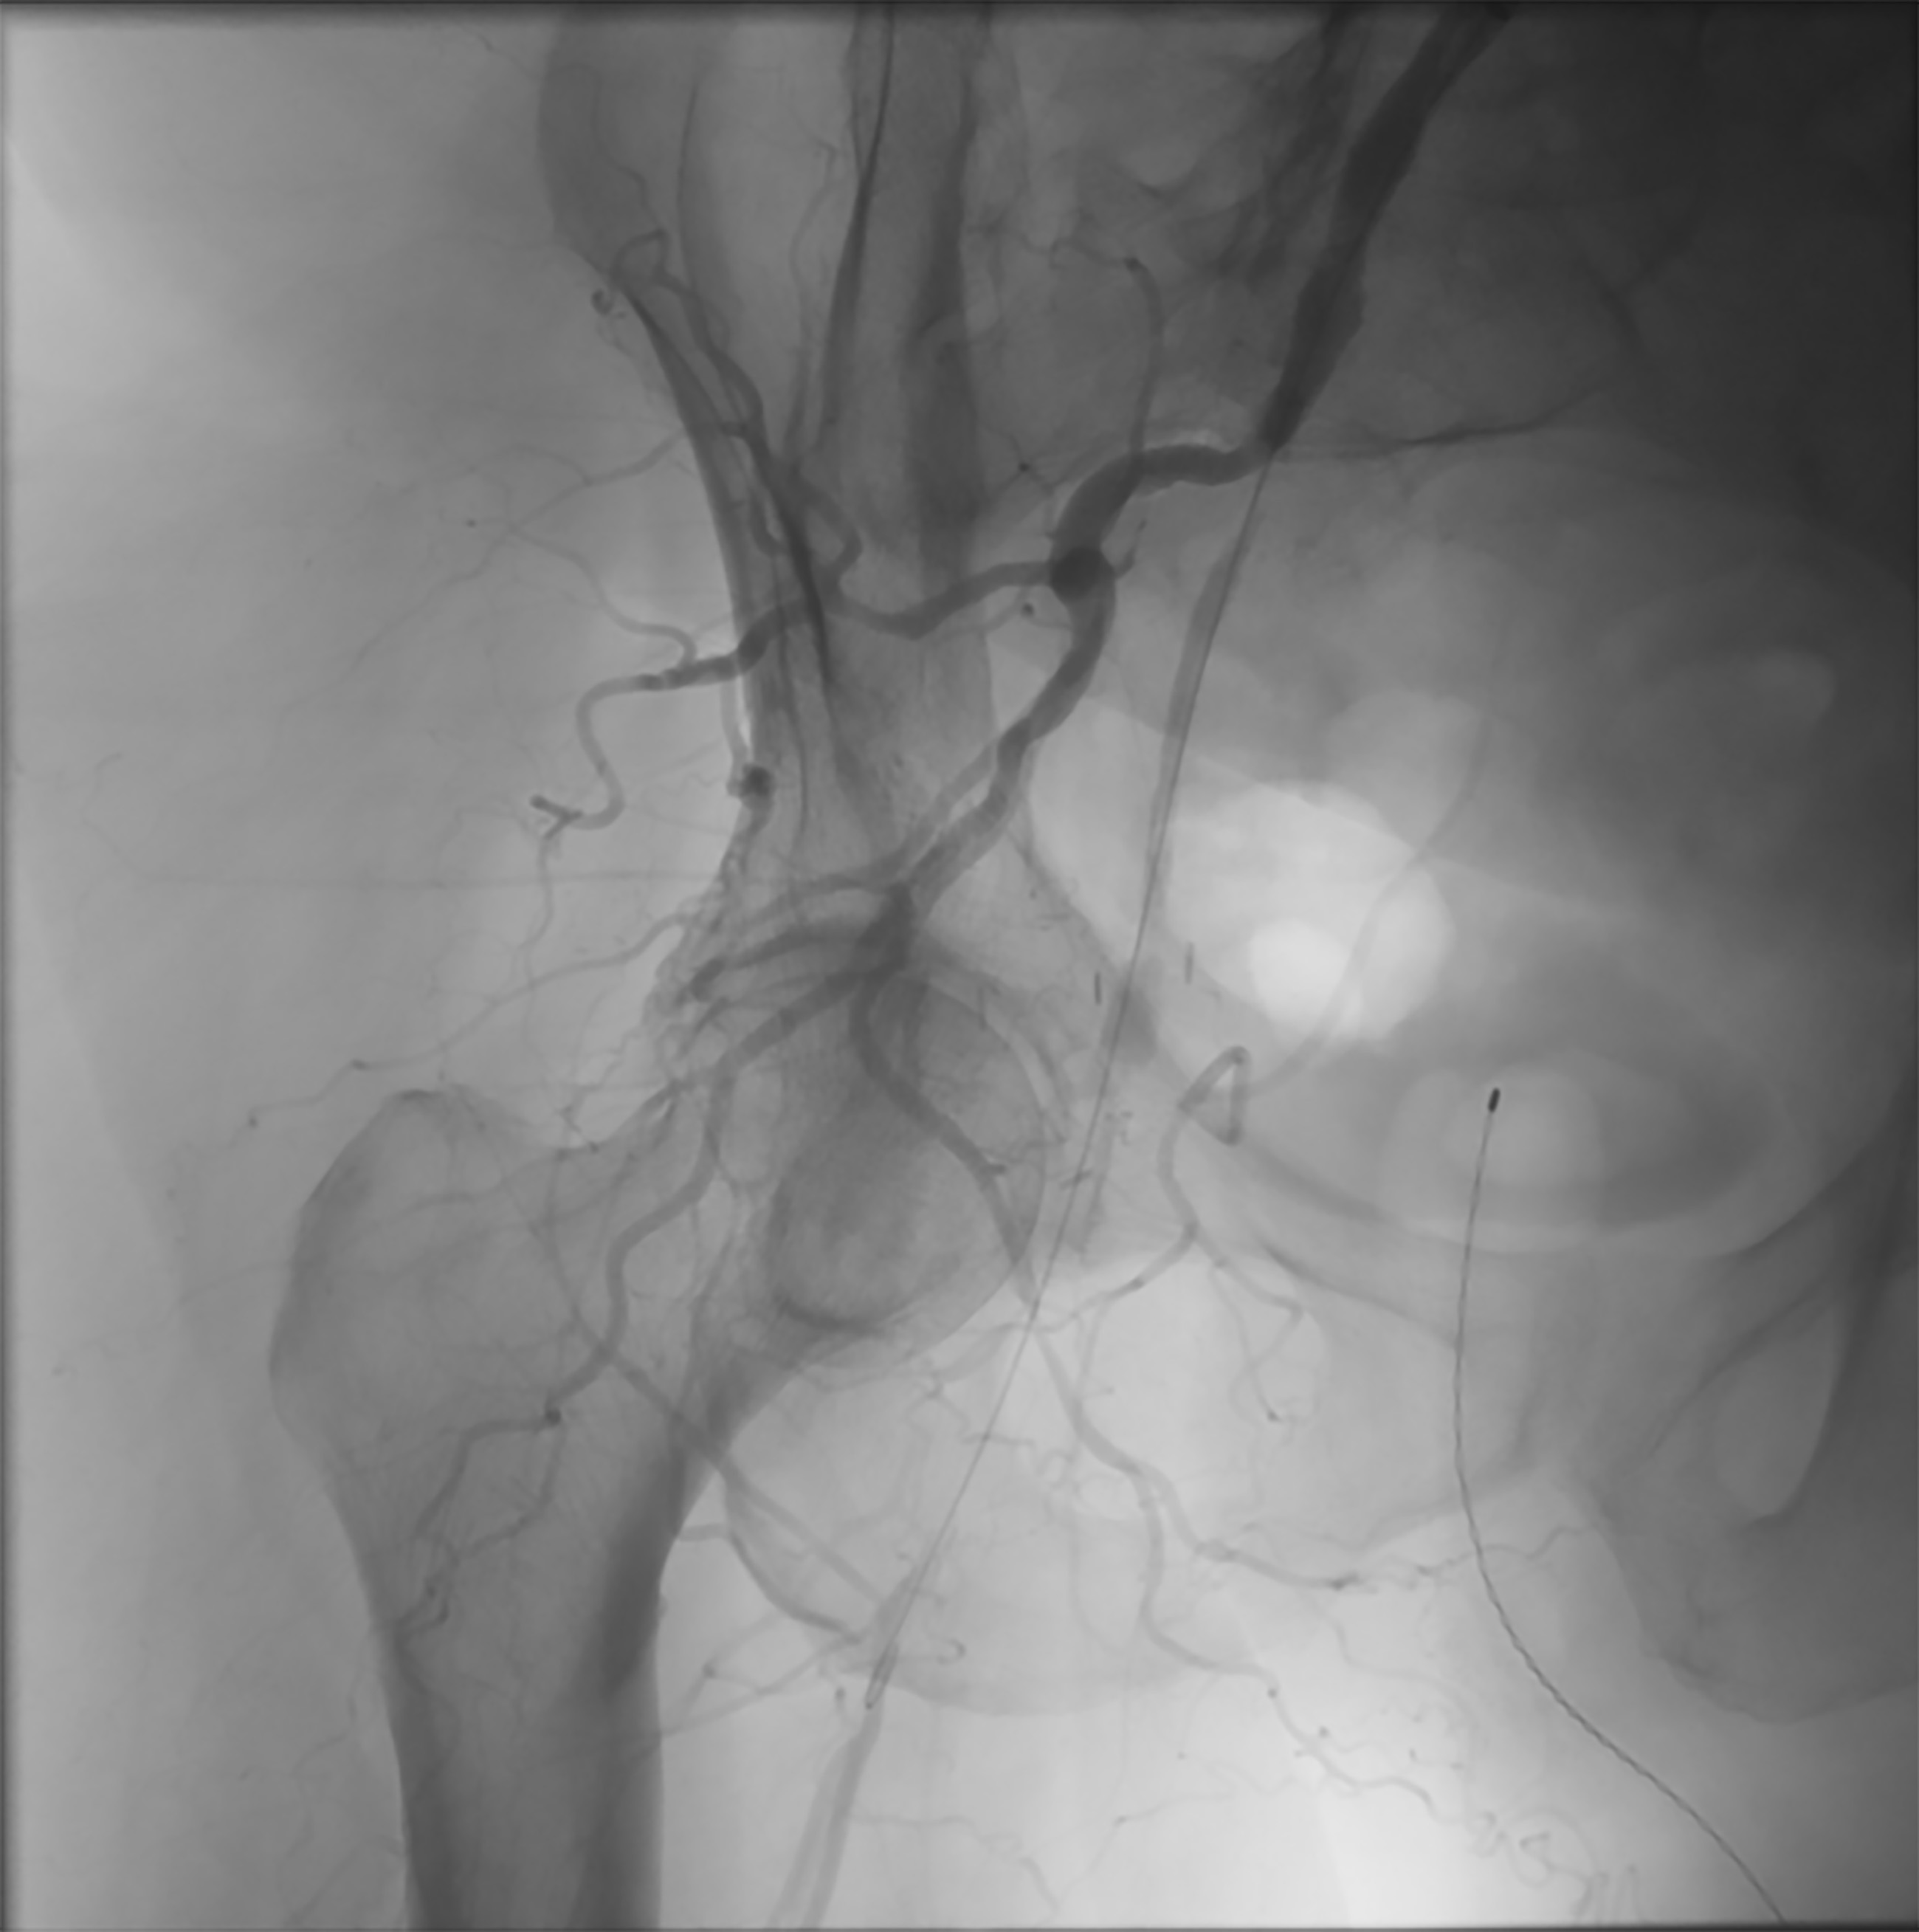 Occlusion of external iliac artery